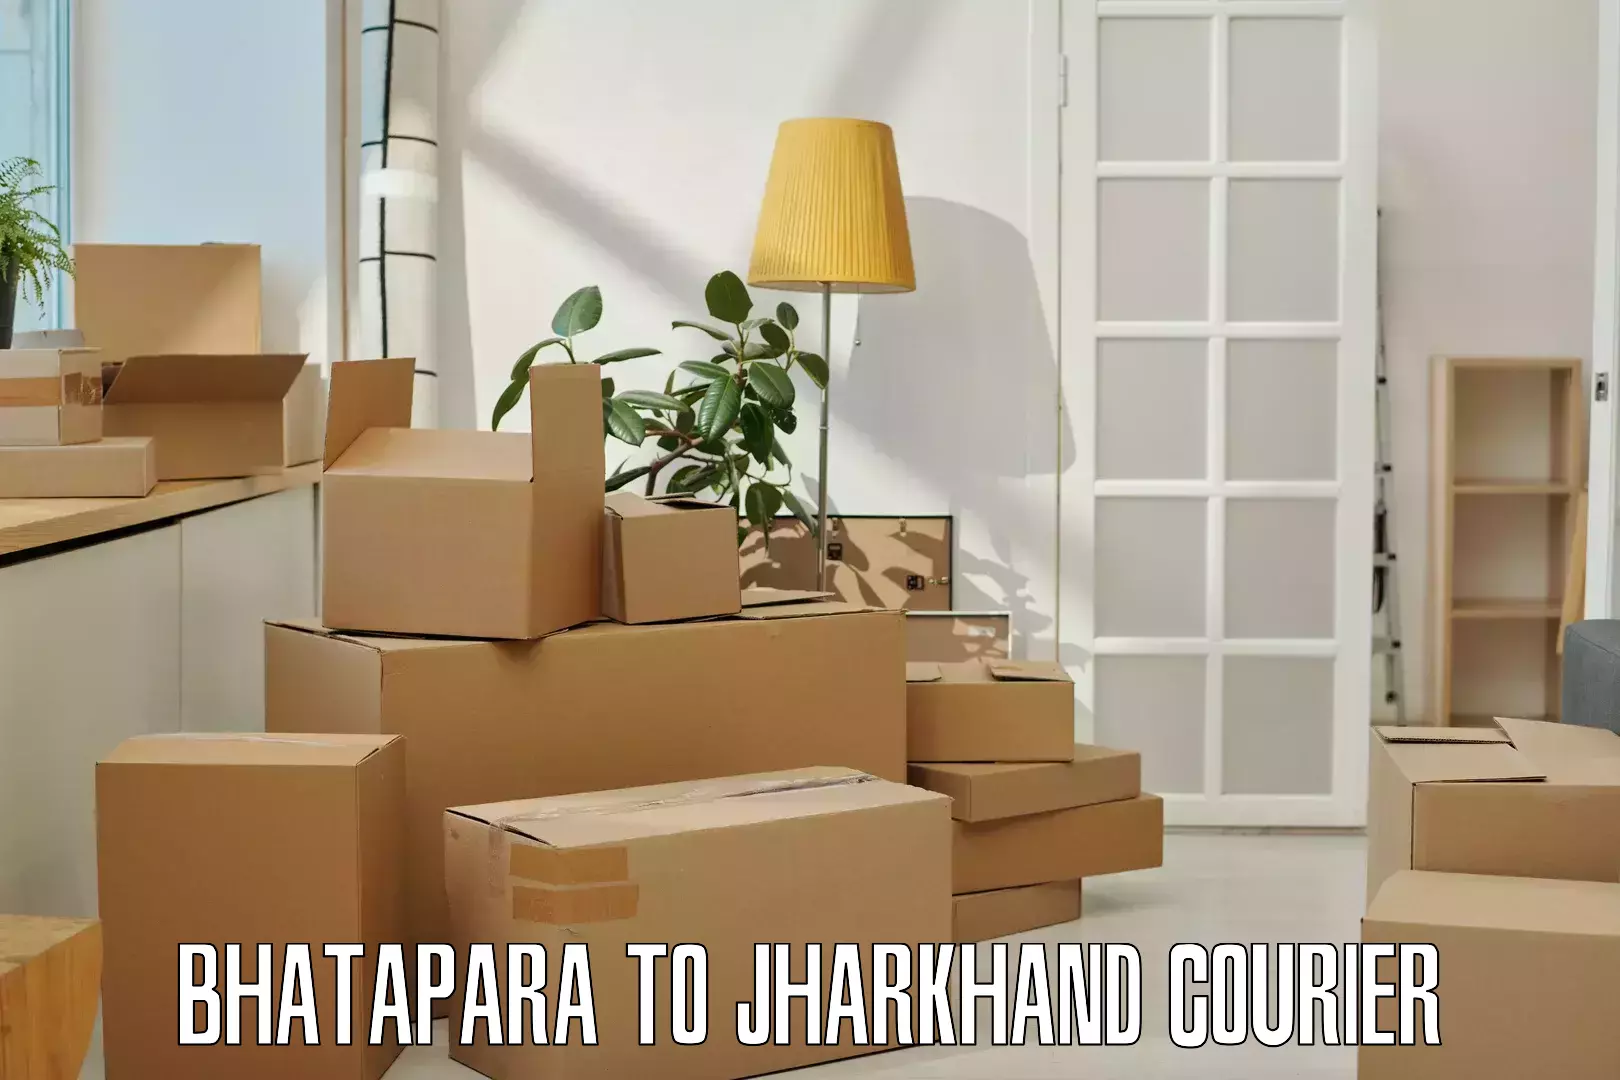 Express mail solutions Bhatapara to Jamtara